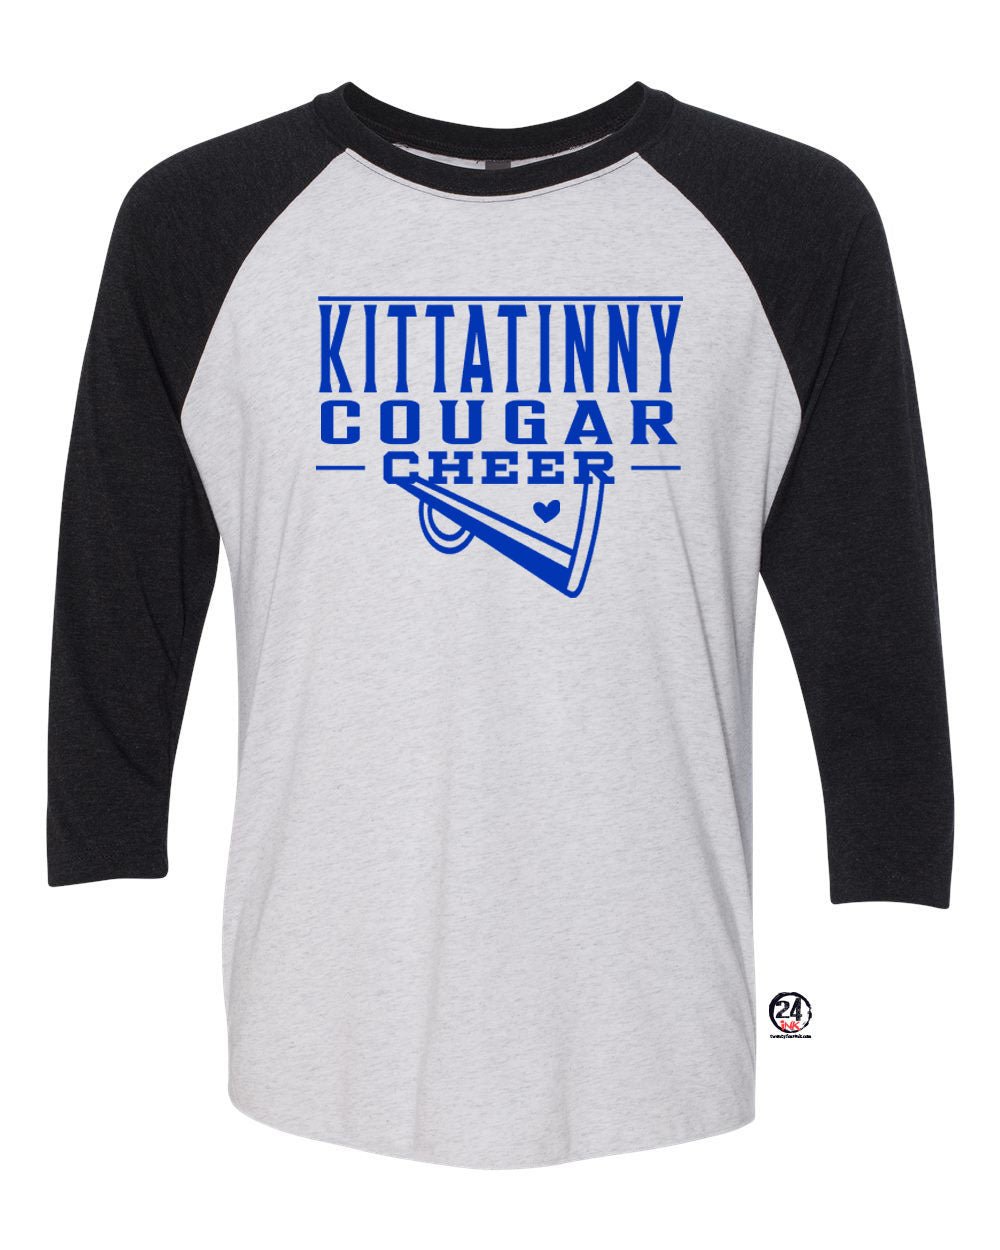 Kittatinny Cheer Design 11 raglan shirt